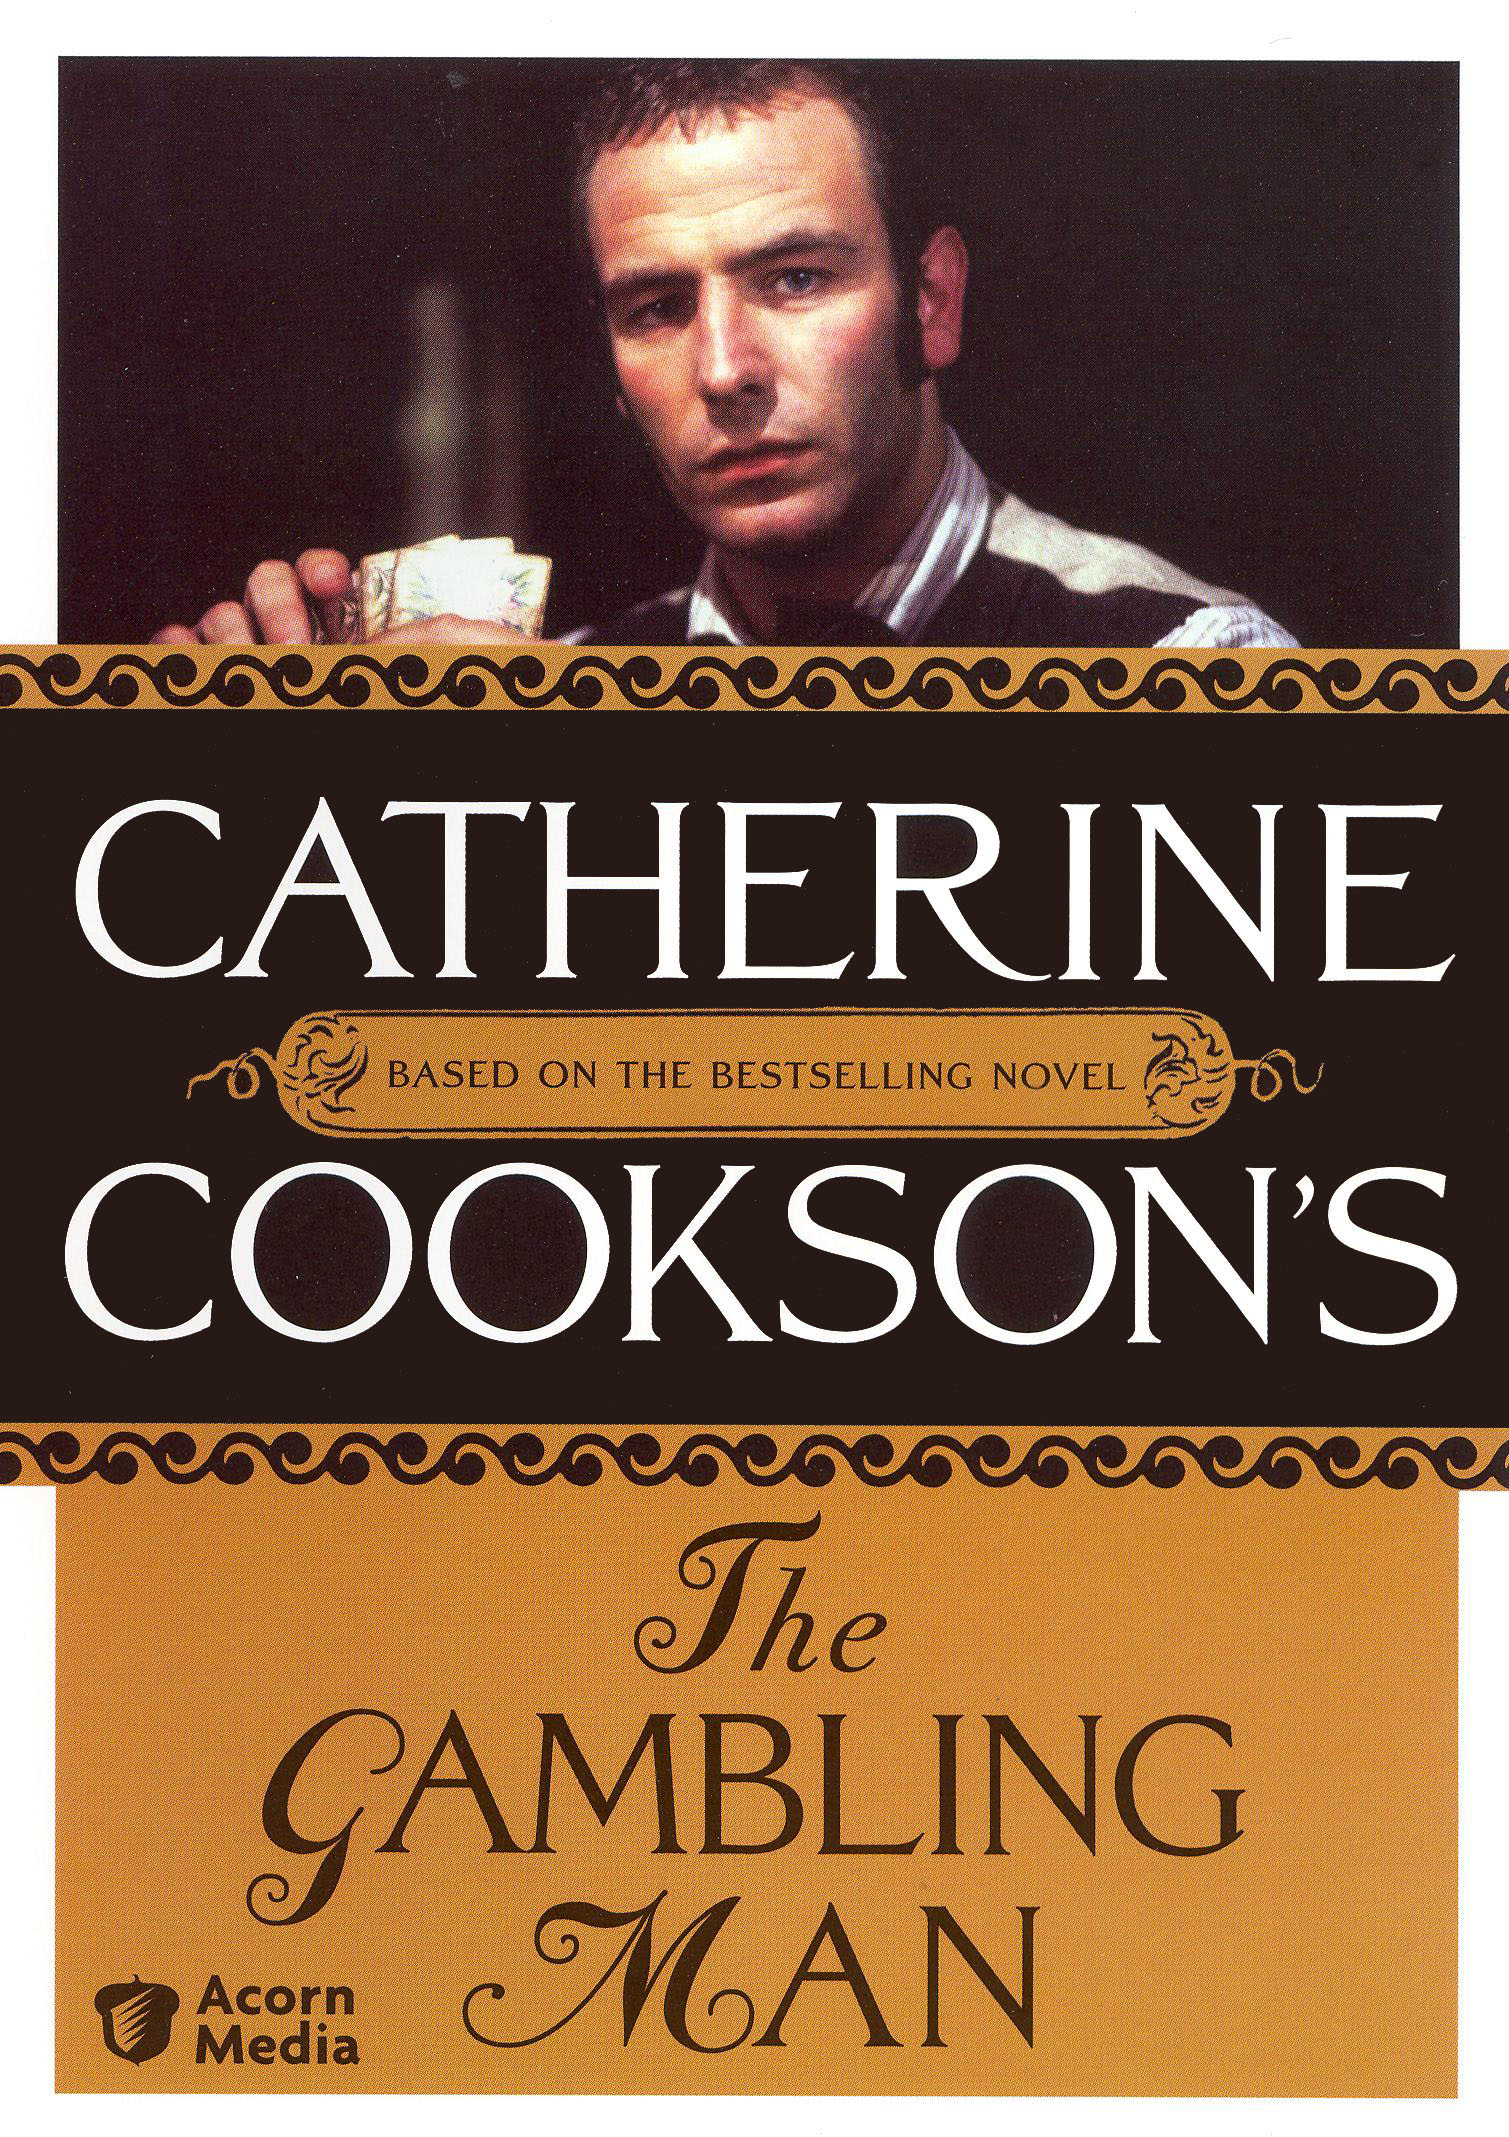 Catherine Cookson Gambling Man Cast